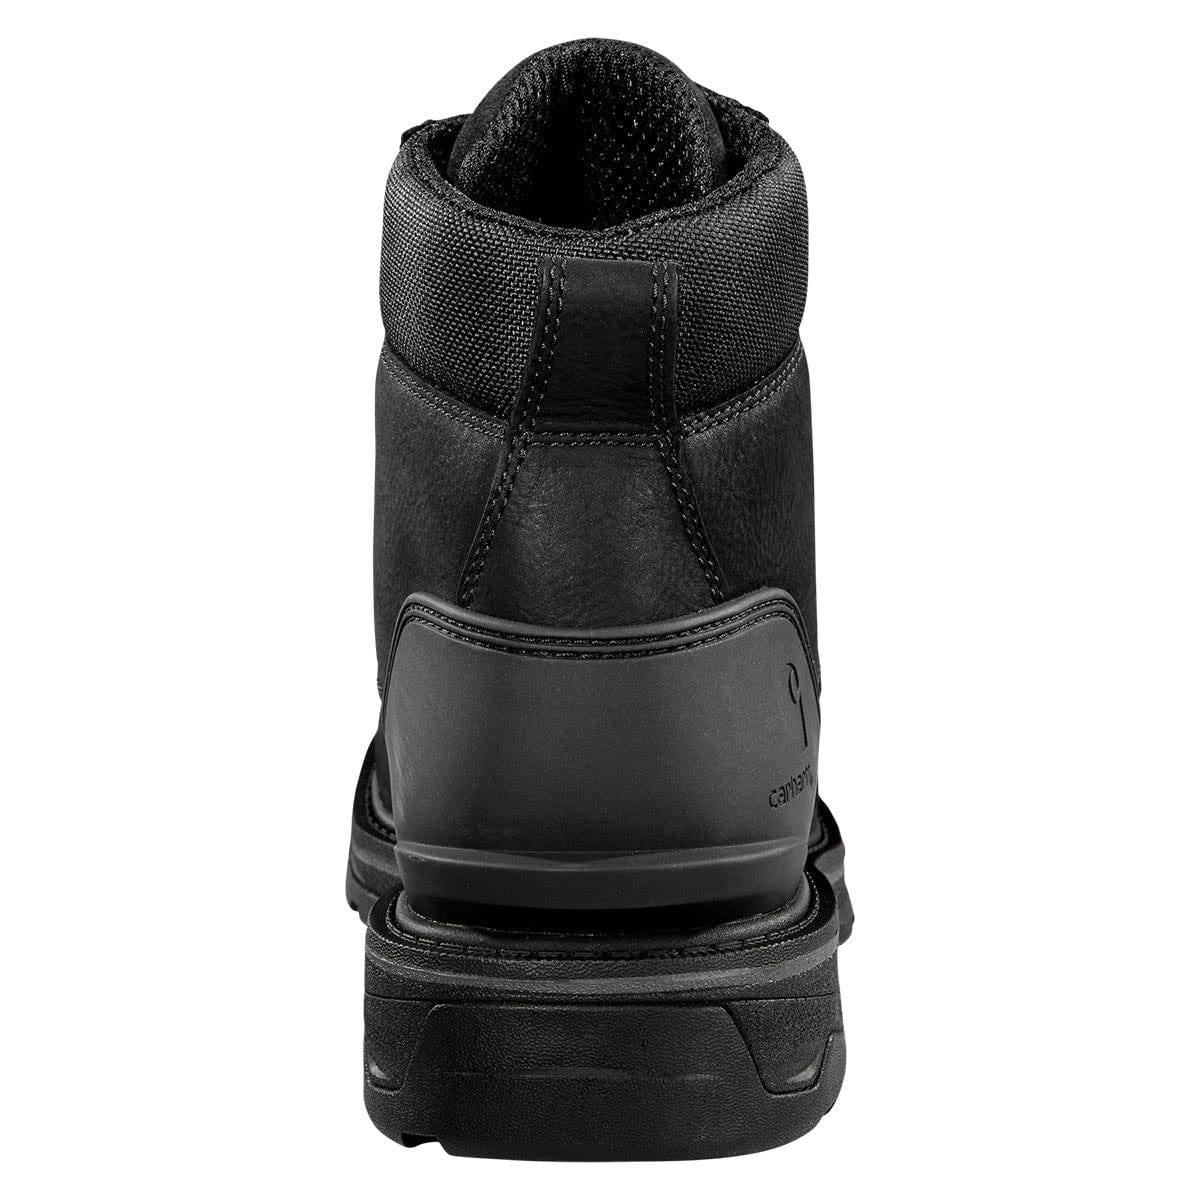 Carhartt Men's Ironwood Waterproof 6" Work Boots - Black